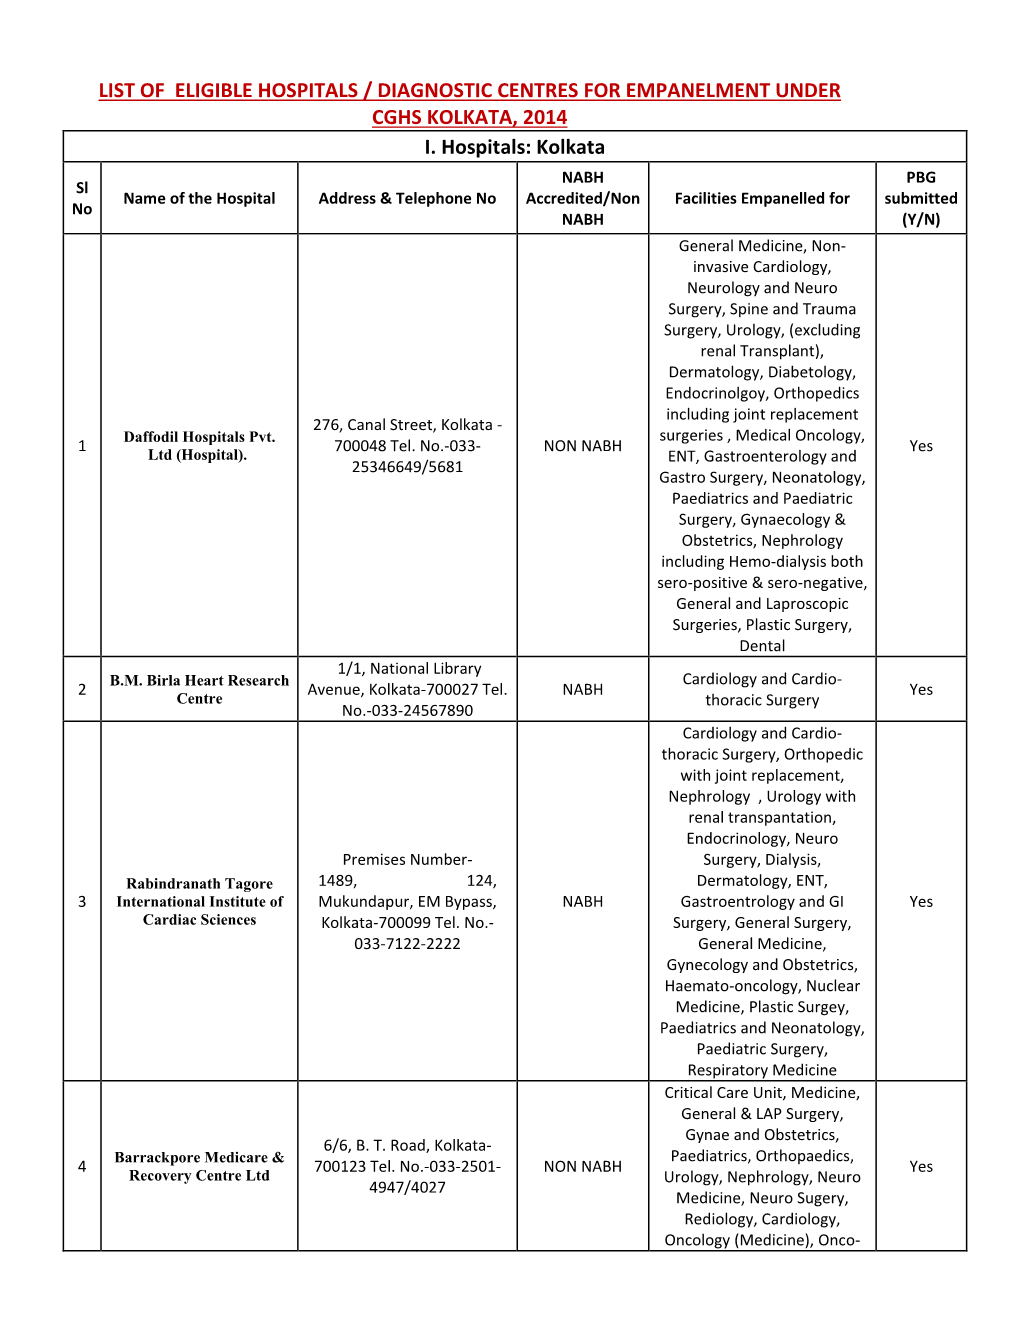 List of Eligible Hospitals / Diagnostic Centres for Empanelment Under Cghs Kolkata, 2014 I